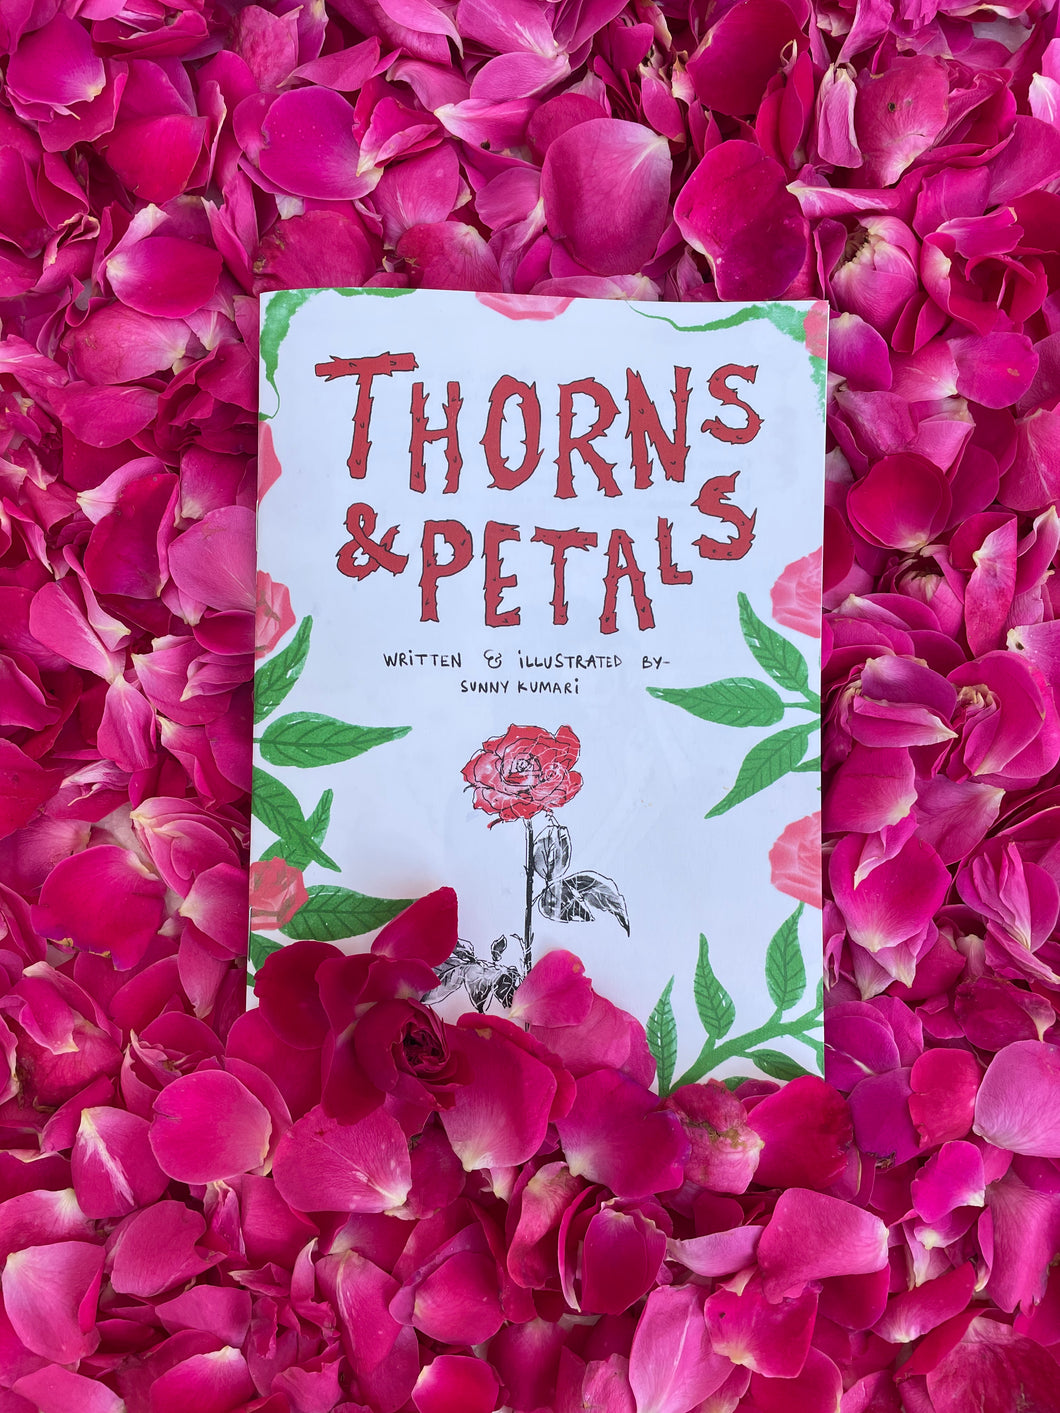 Thorns & Petals - An Illustrated Zine by Sunny Kumari